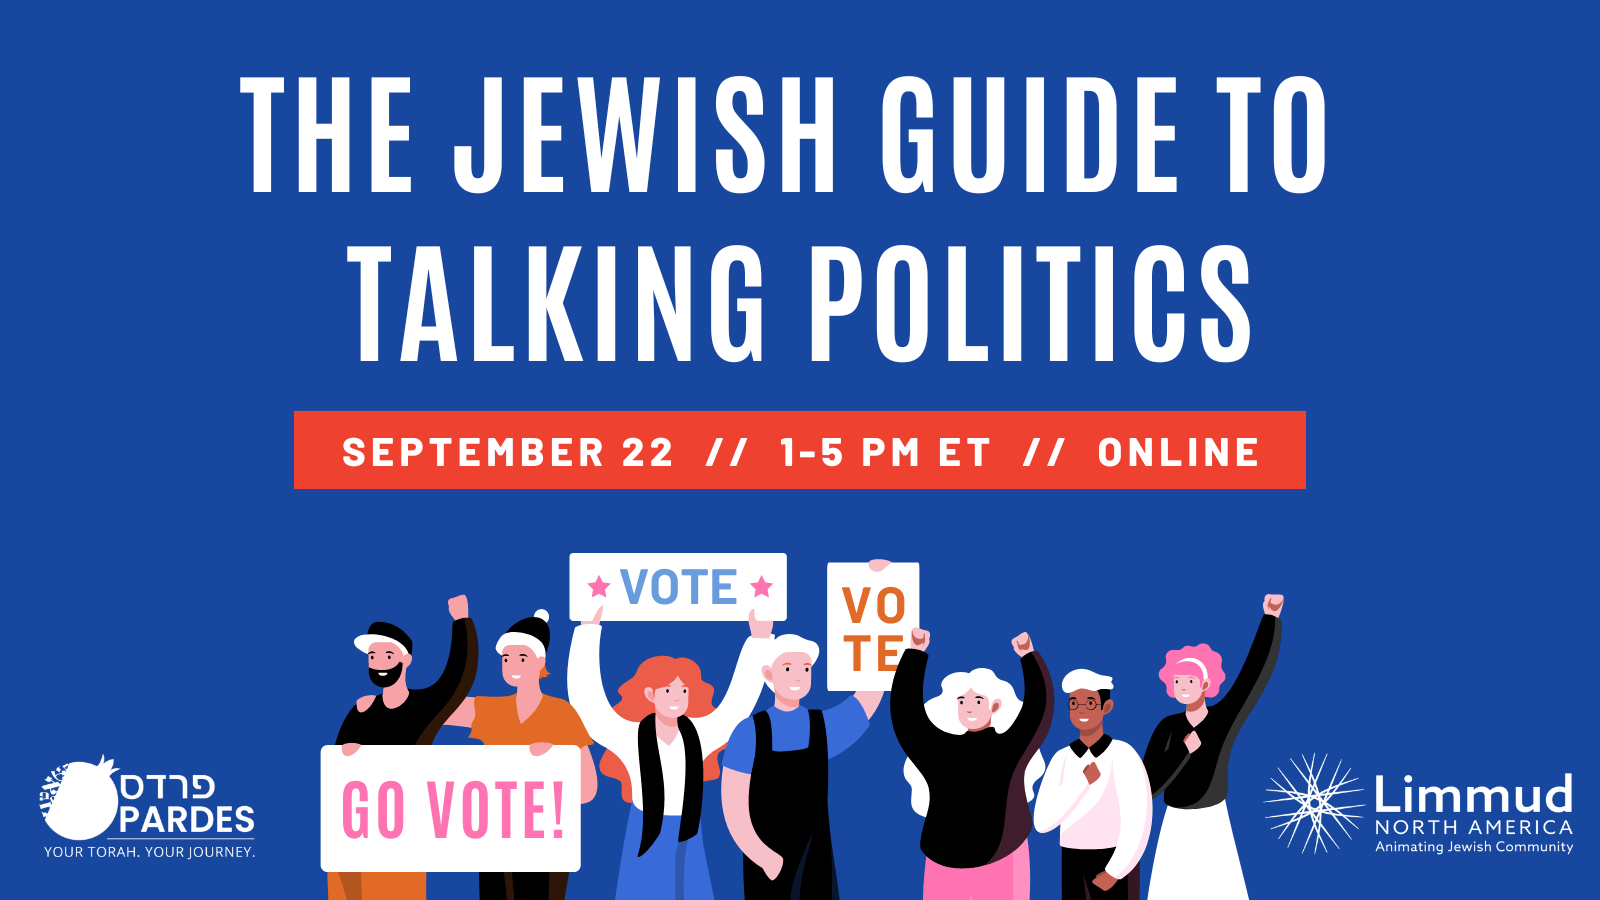 The Jewish Guide to Talking Politics